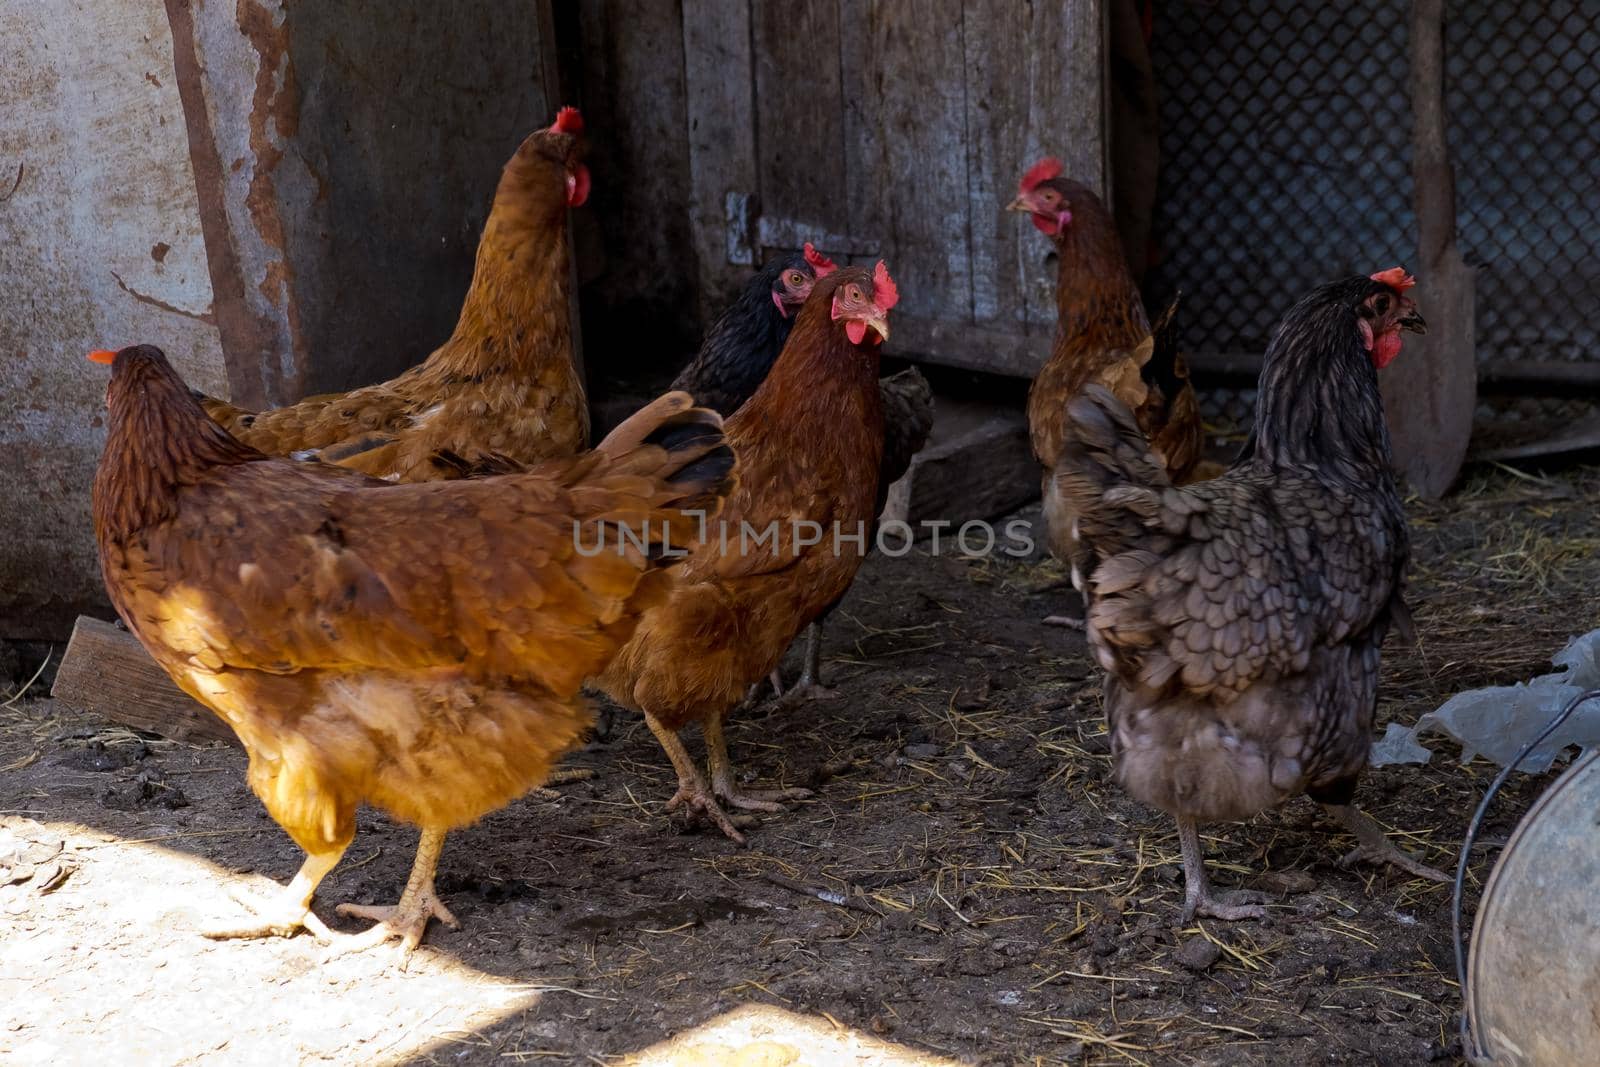 Profile portrait of a chicken. Chickens in a chicken coop.